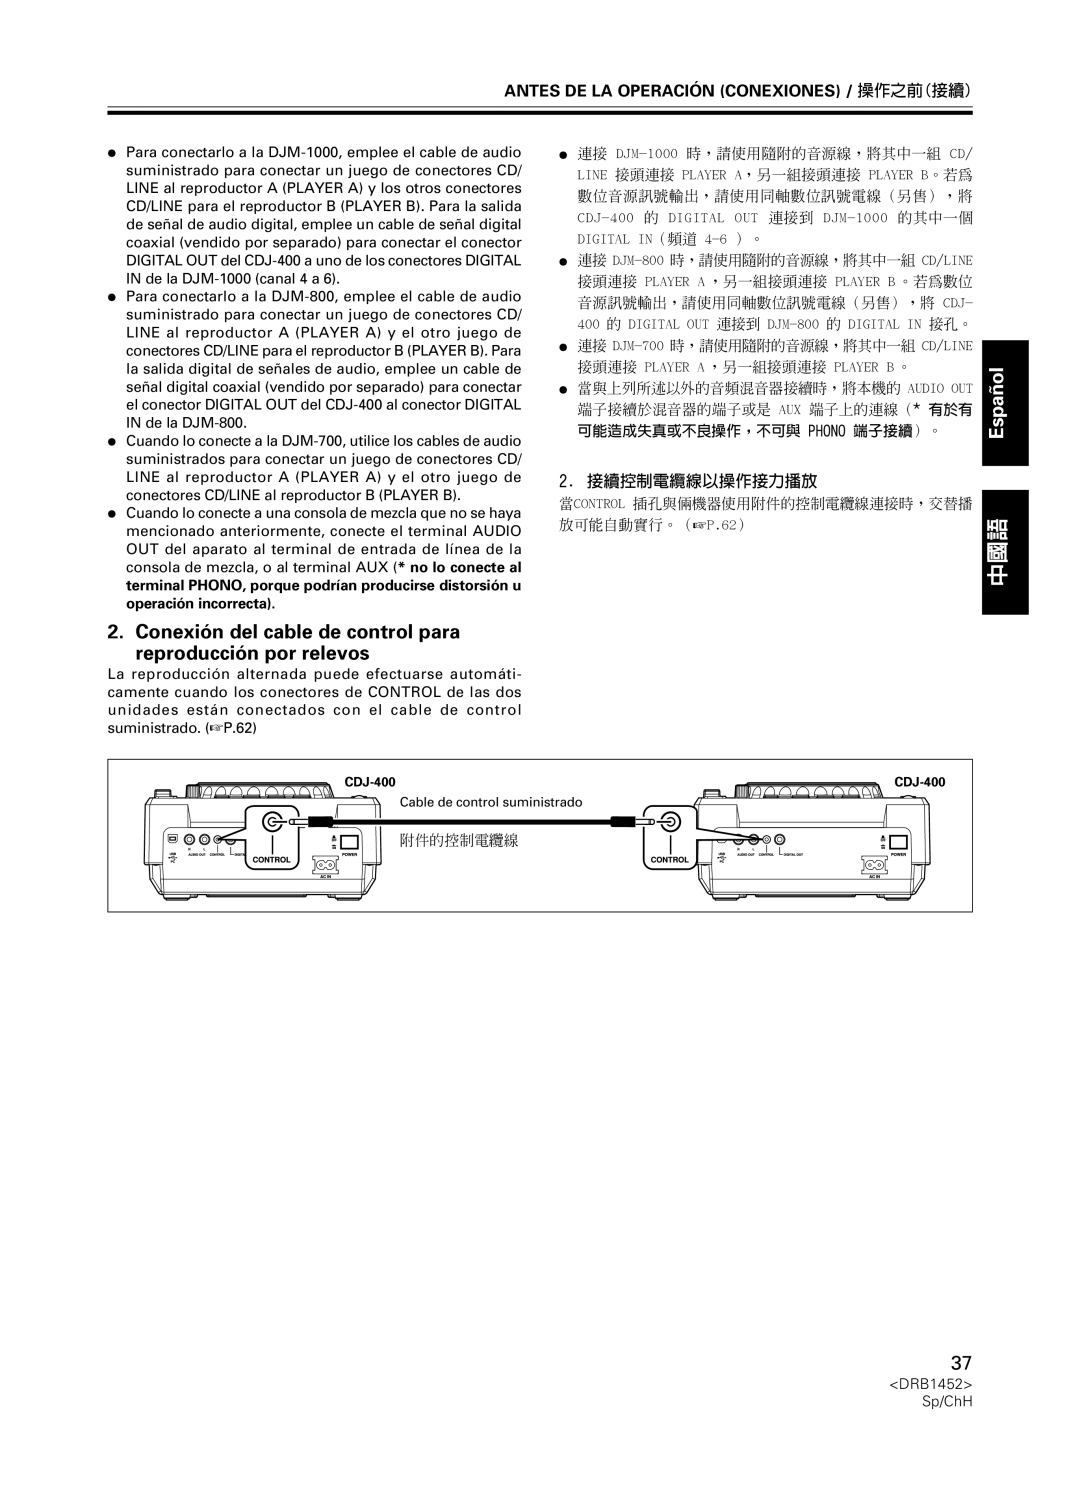 Pioneer CDJ-400 manual 2.接續控制電纜線以操作接力播放, 附件的控制電纜線, Español, Antes De La Operación Conexiones / 操作之前接續 